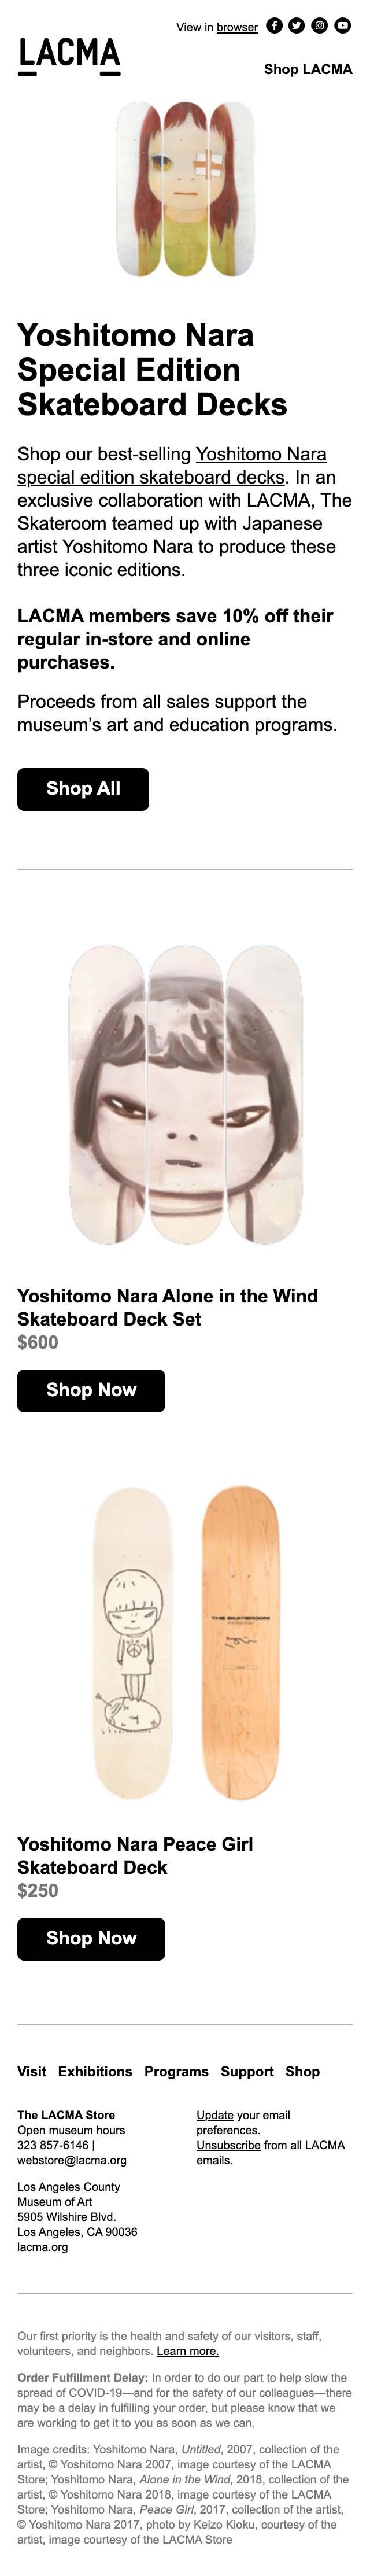 LACMA Store: Yoshitomo Nara Skateboard Decks - mobile view